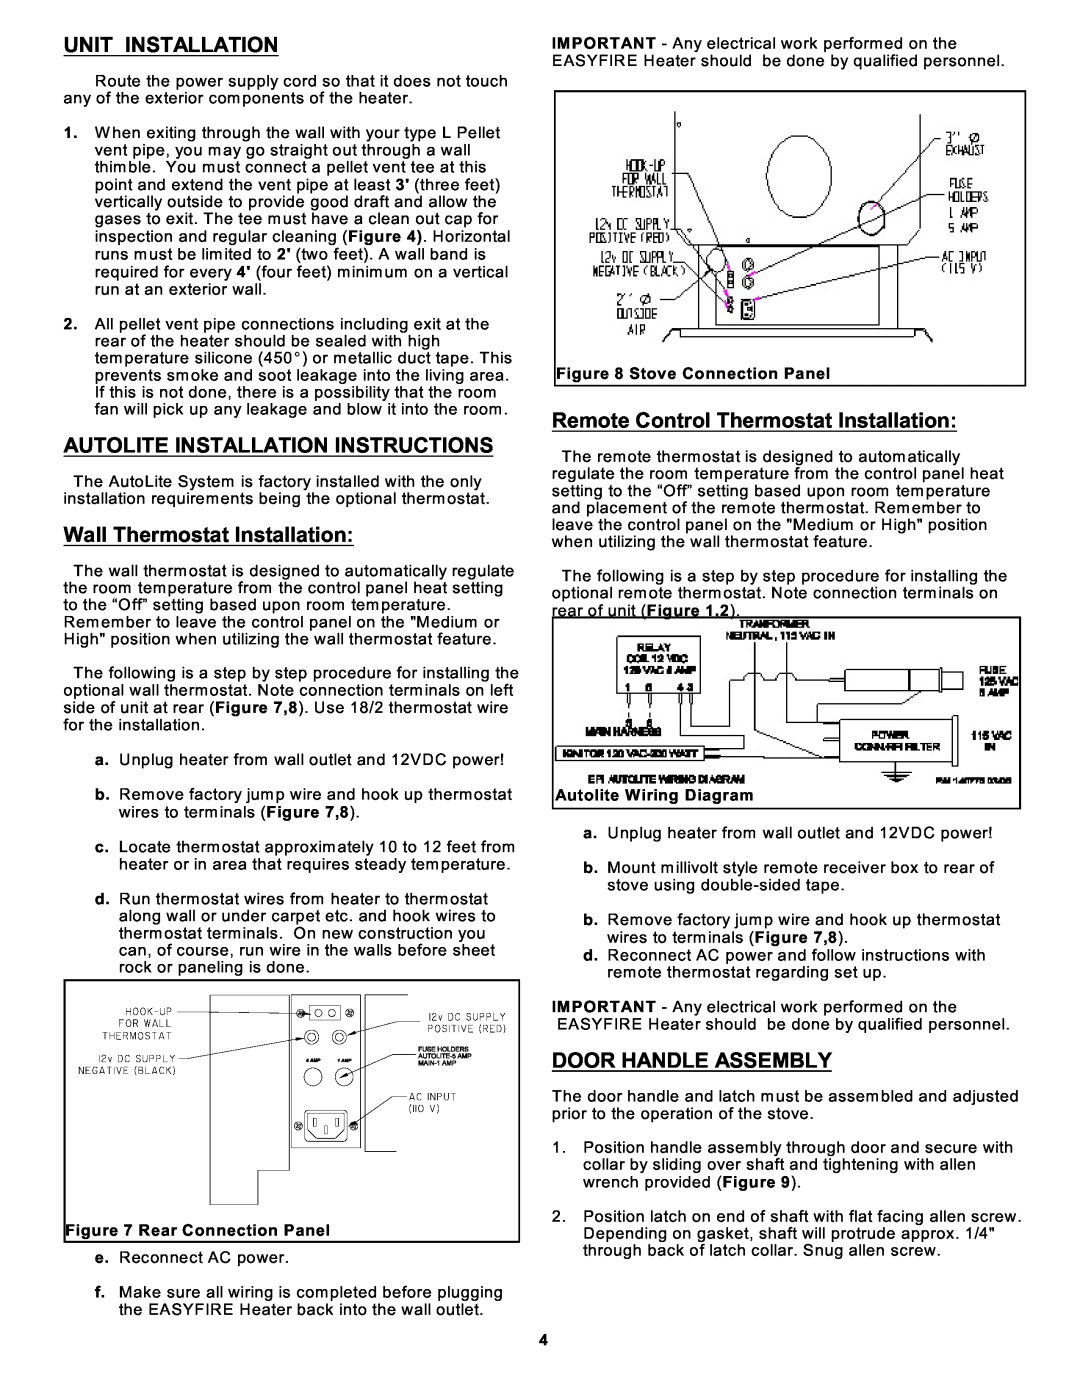 Sierra Products EF5001U owner manual Unit Installation, Autolite Installation Instructions, Wall Thermostat Installation 